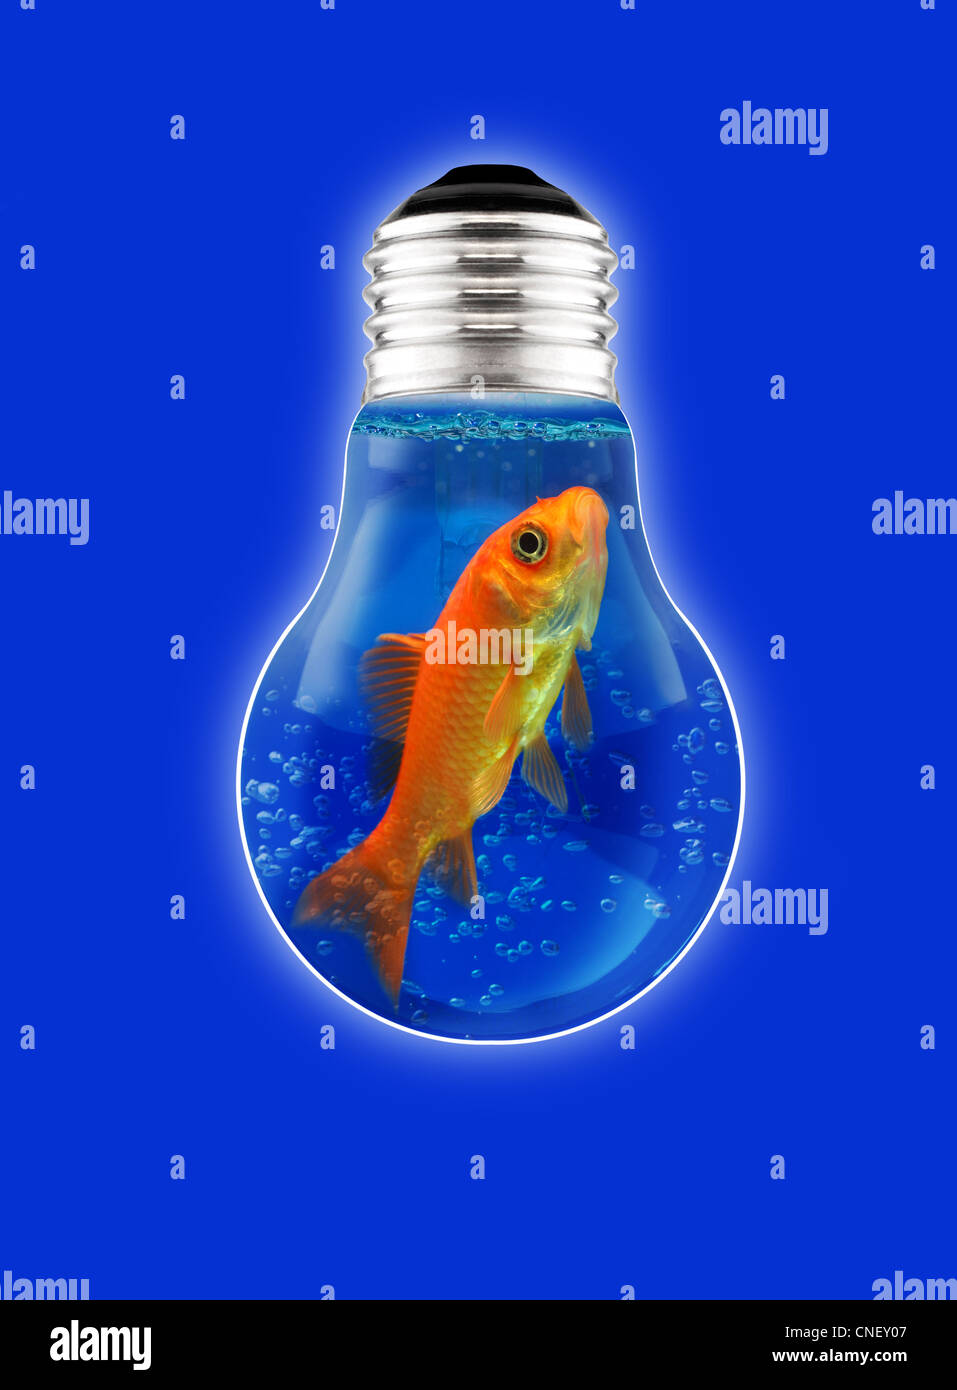 think tank, gold fish, idea, electric light bulb, spark of imagination Stock Photo